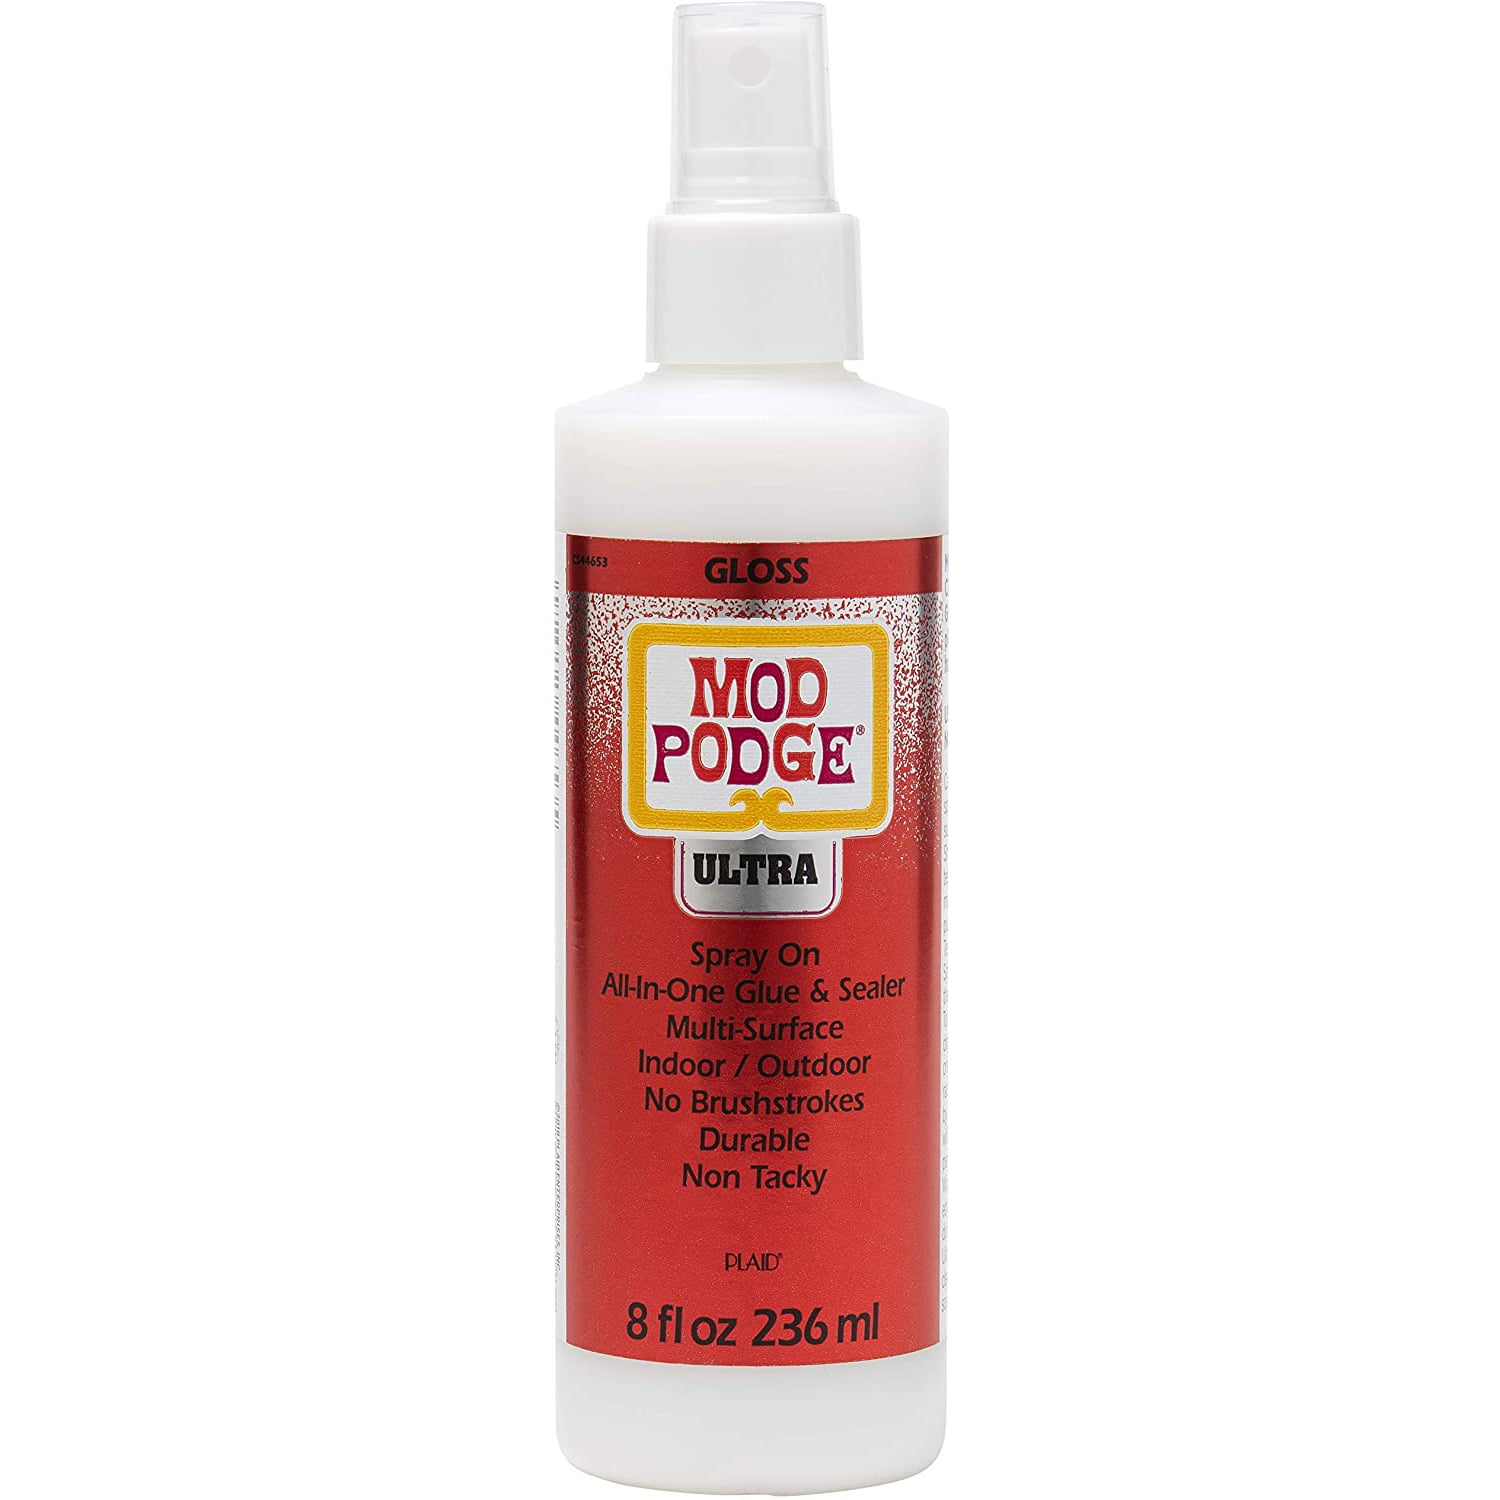 Plaid Mod Podge Craft Glue, Gloss, Sealer & Finisher, Water-Based, 32 oz.